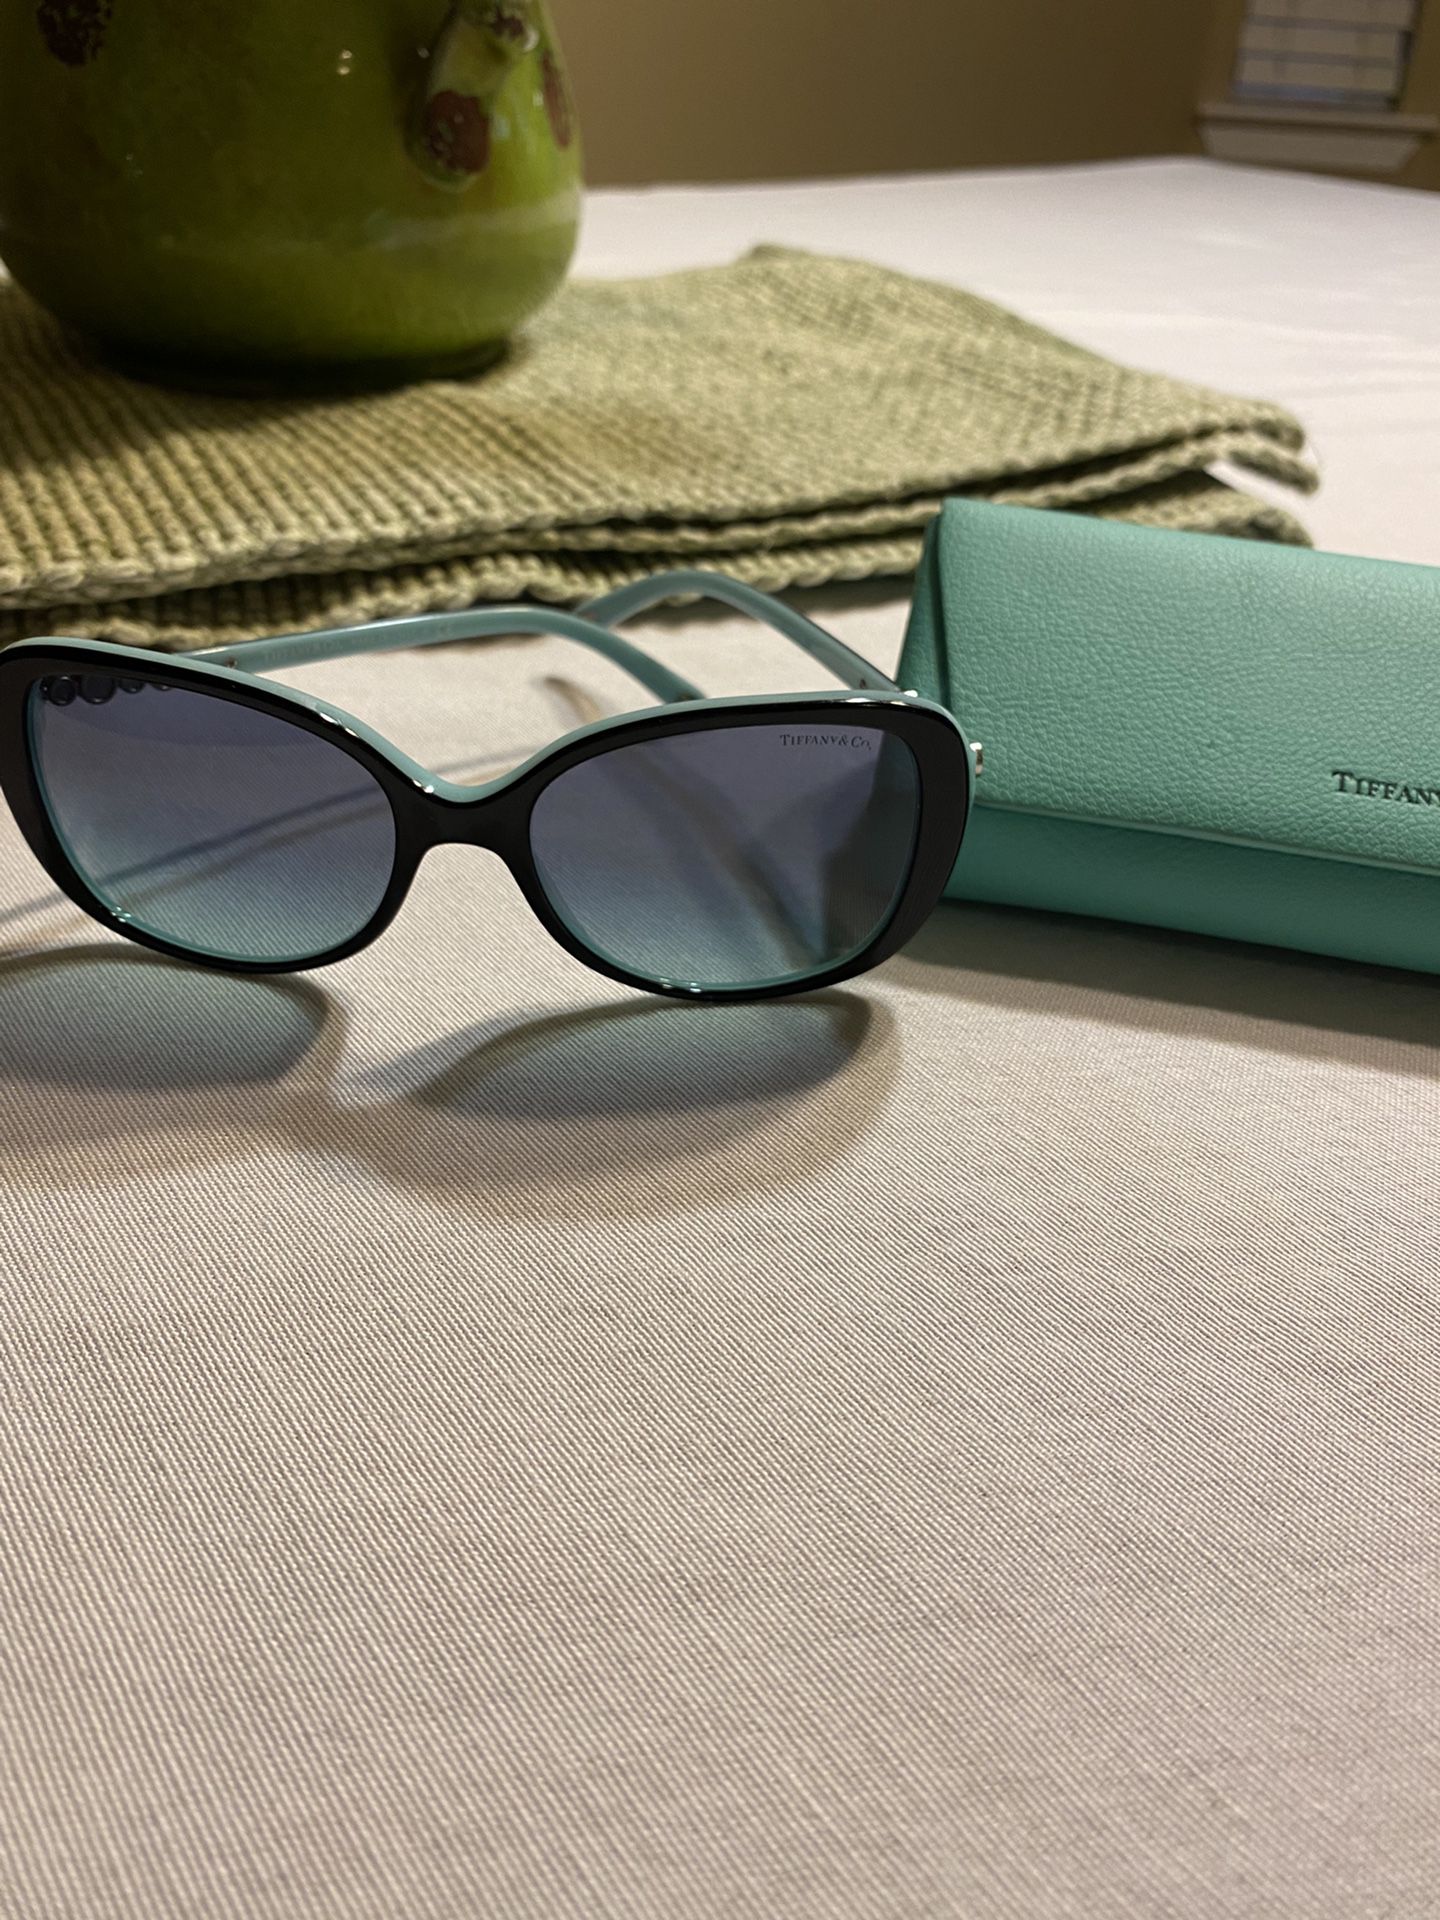 Authentic Tiffany sunglasses 